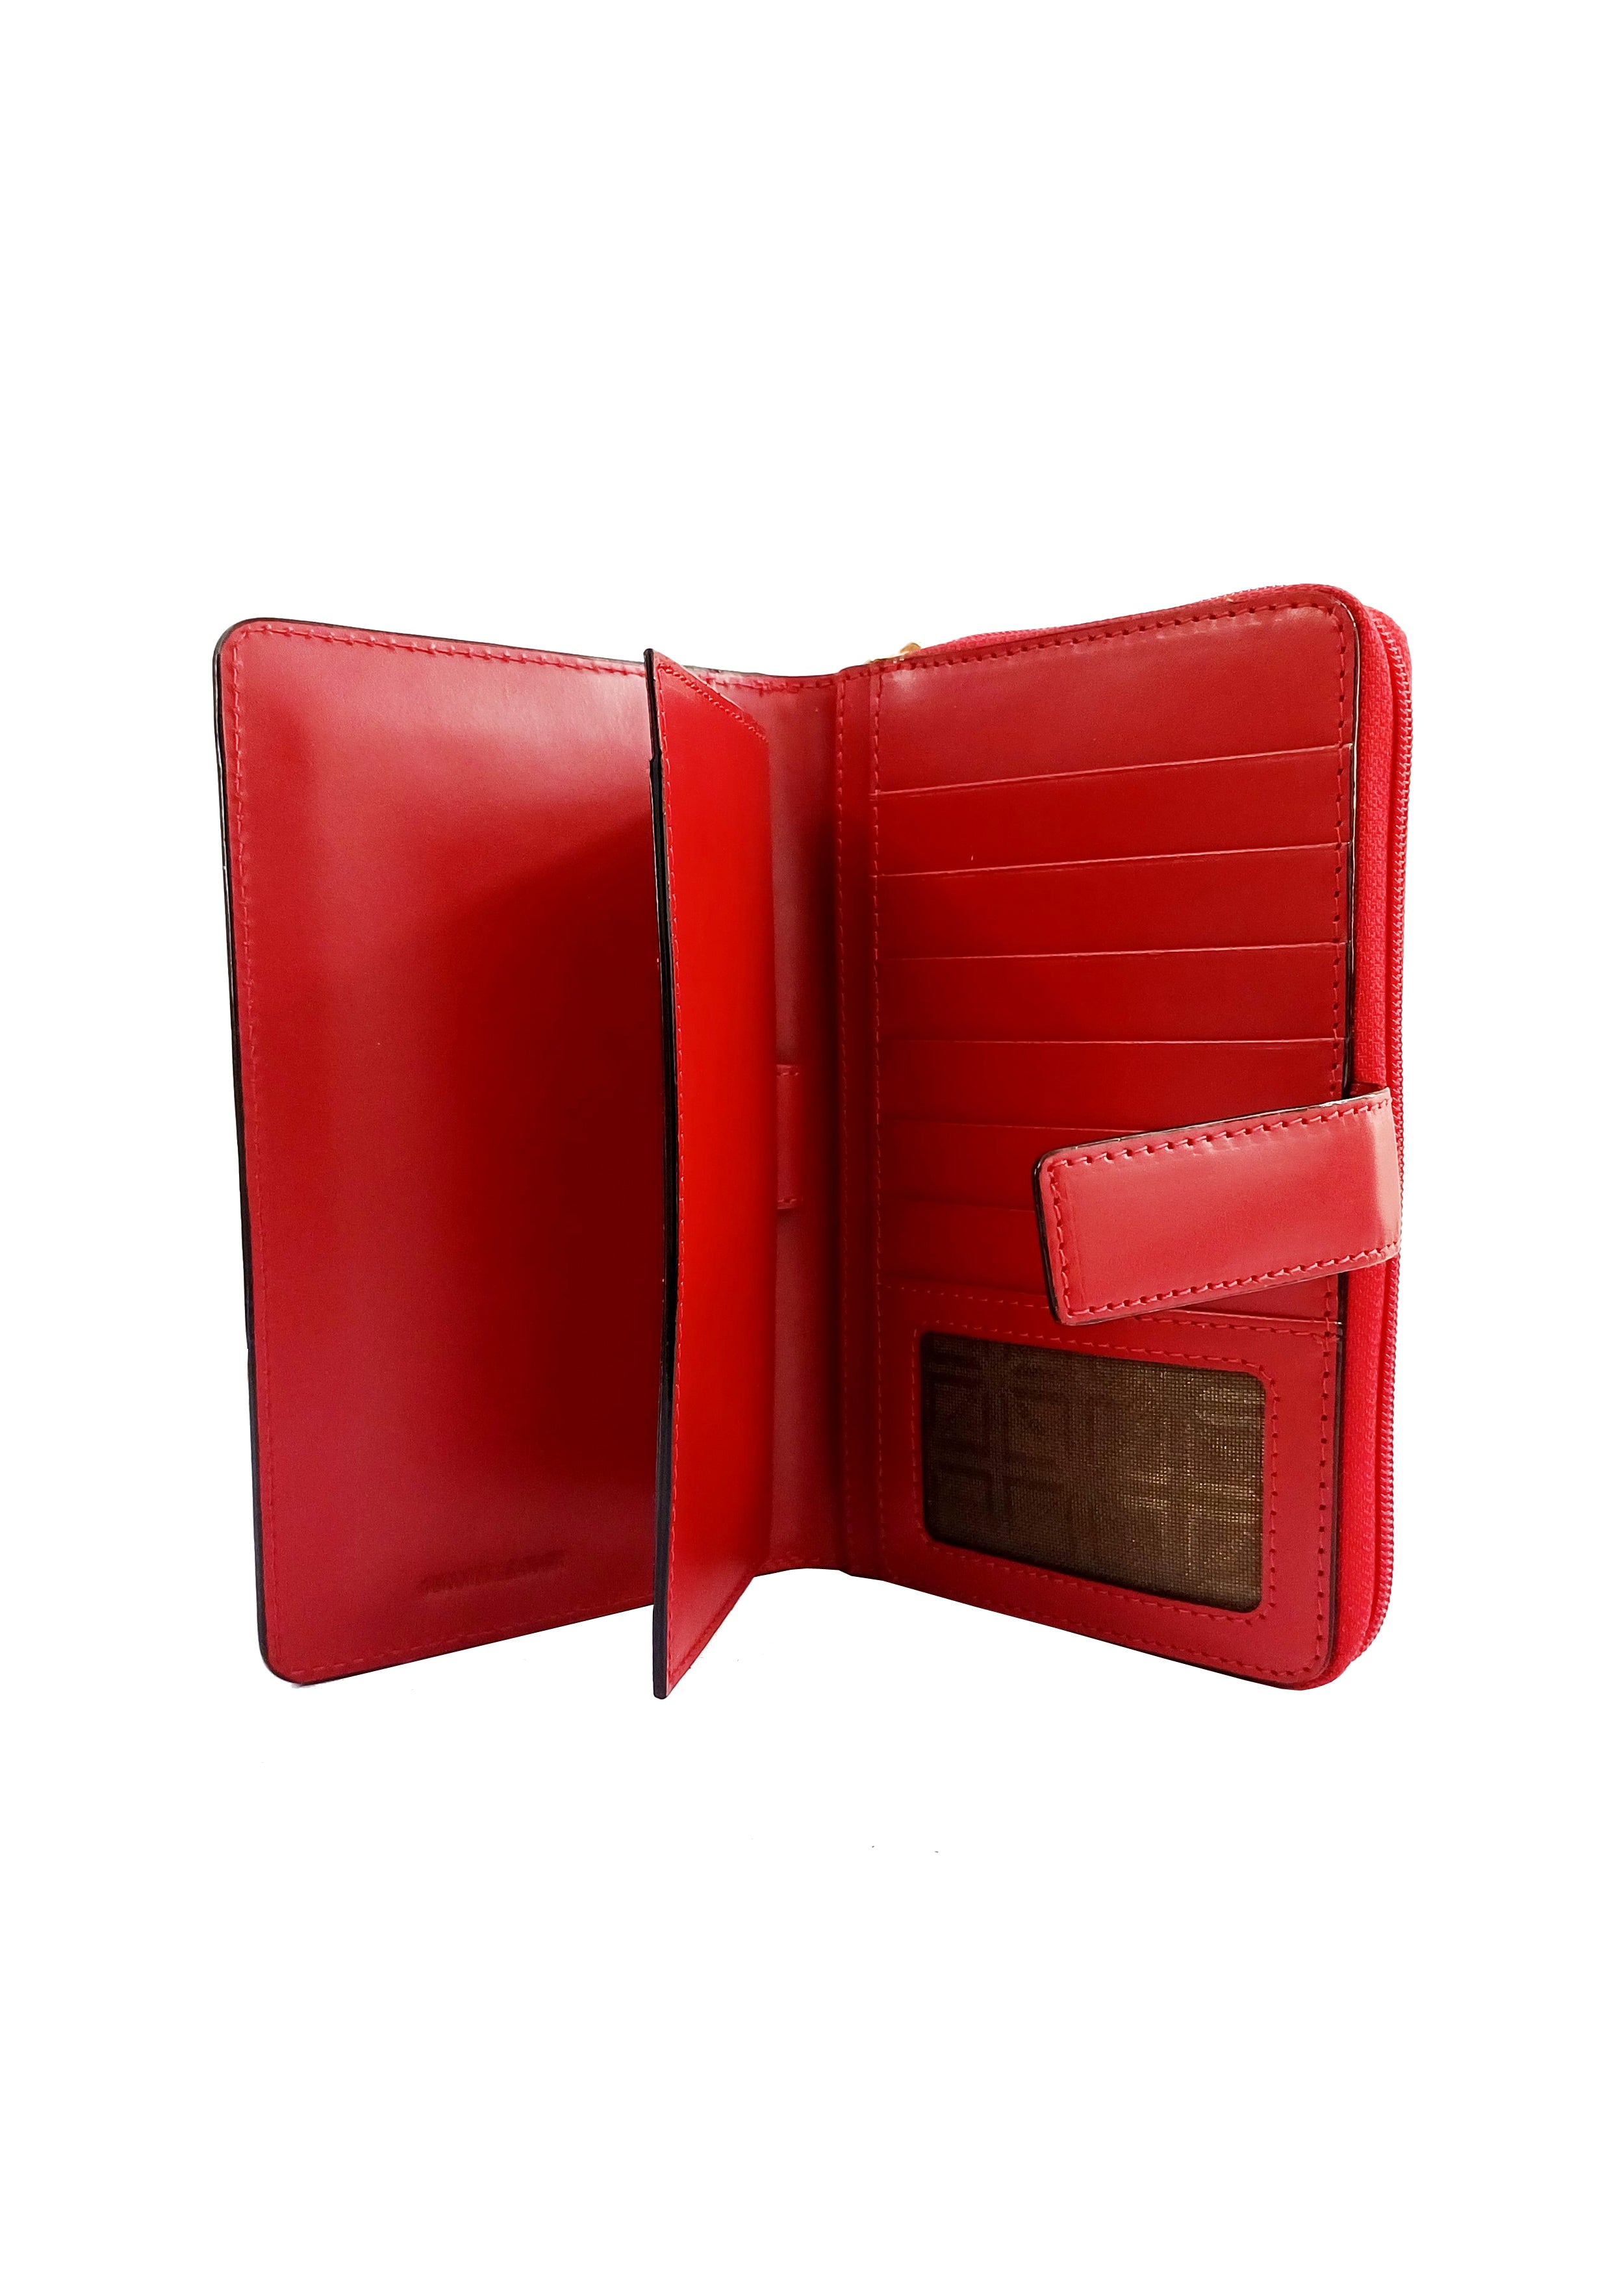 Shop All-Time Favorite Audrey Leather Wallet | Lodis